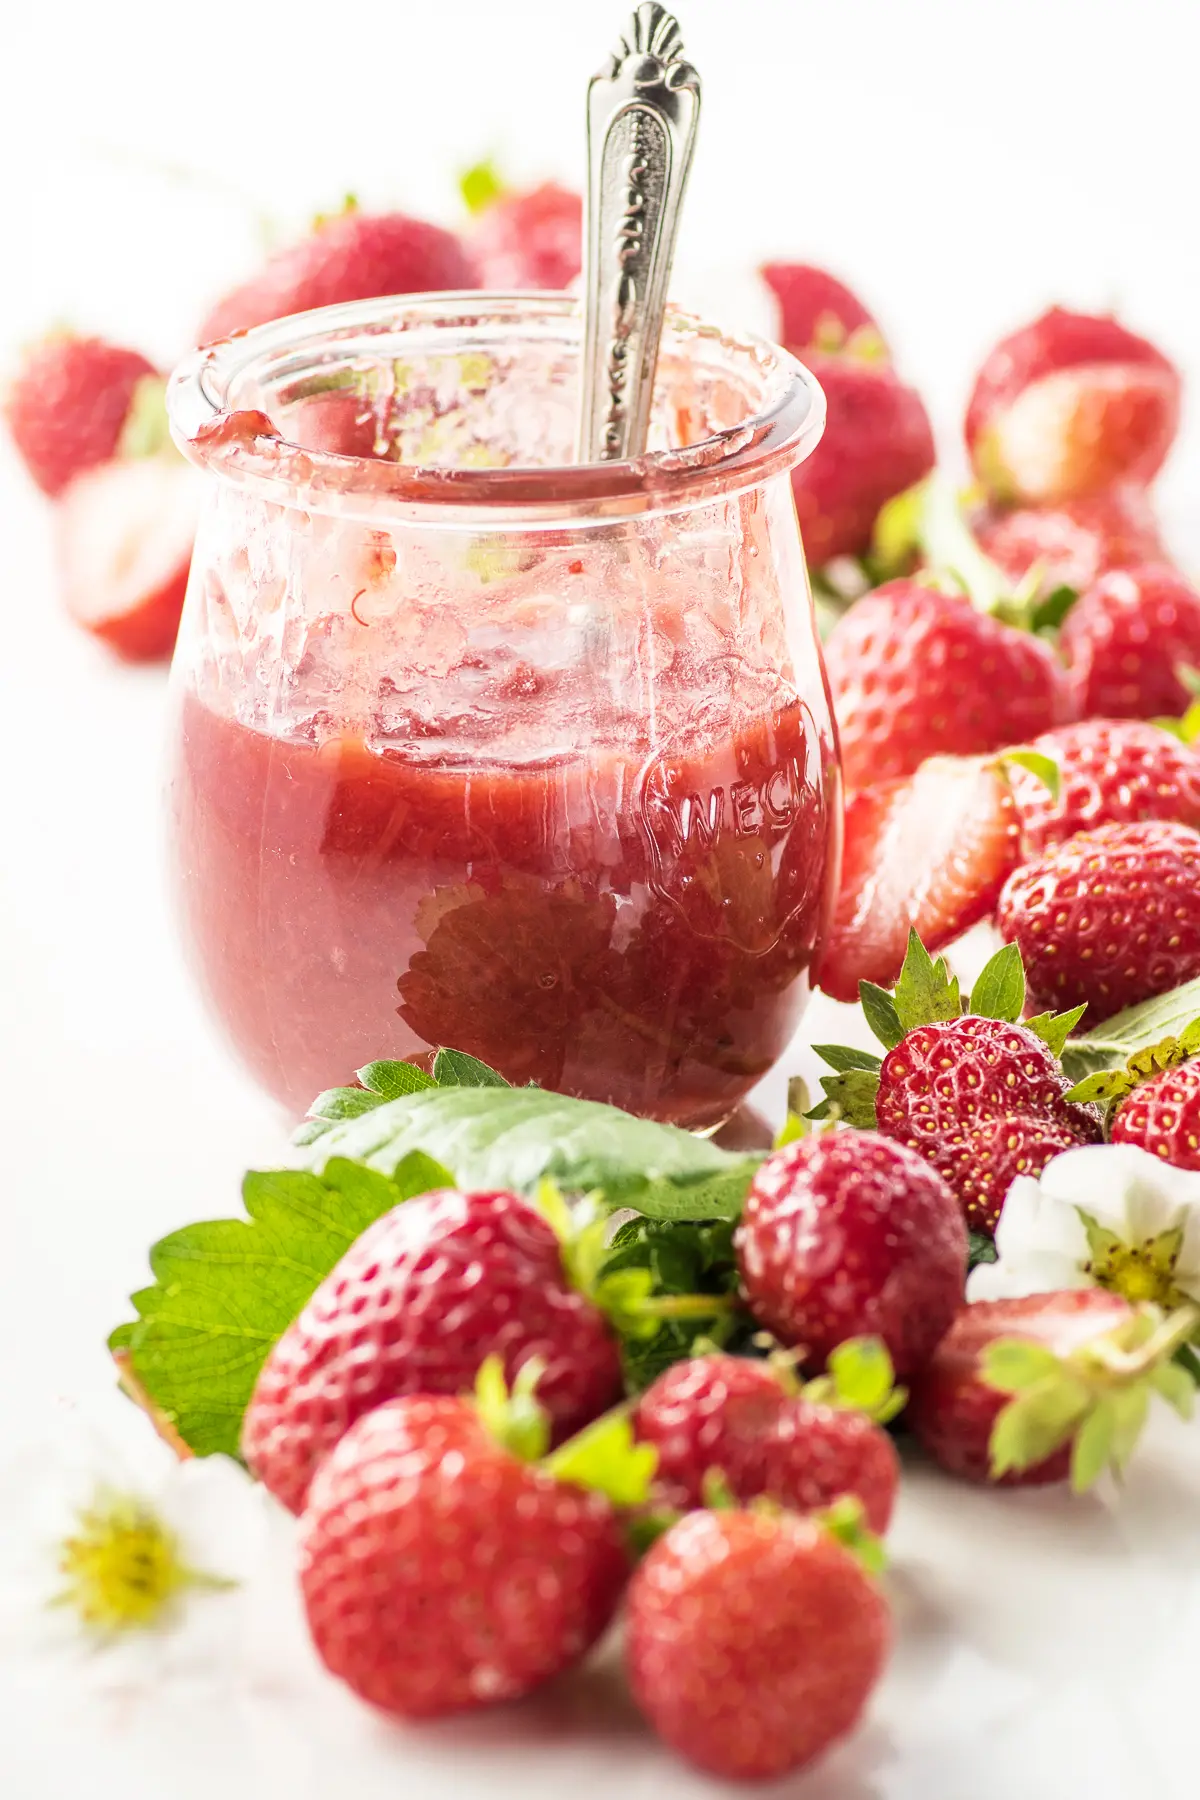 A jar of sugar free strawberry jam, with fresh strawberries piled around it.